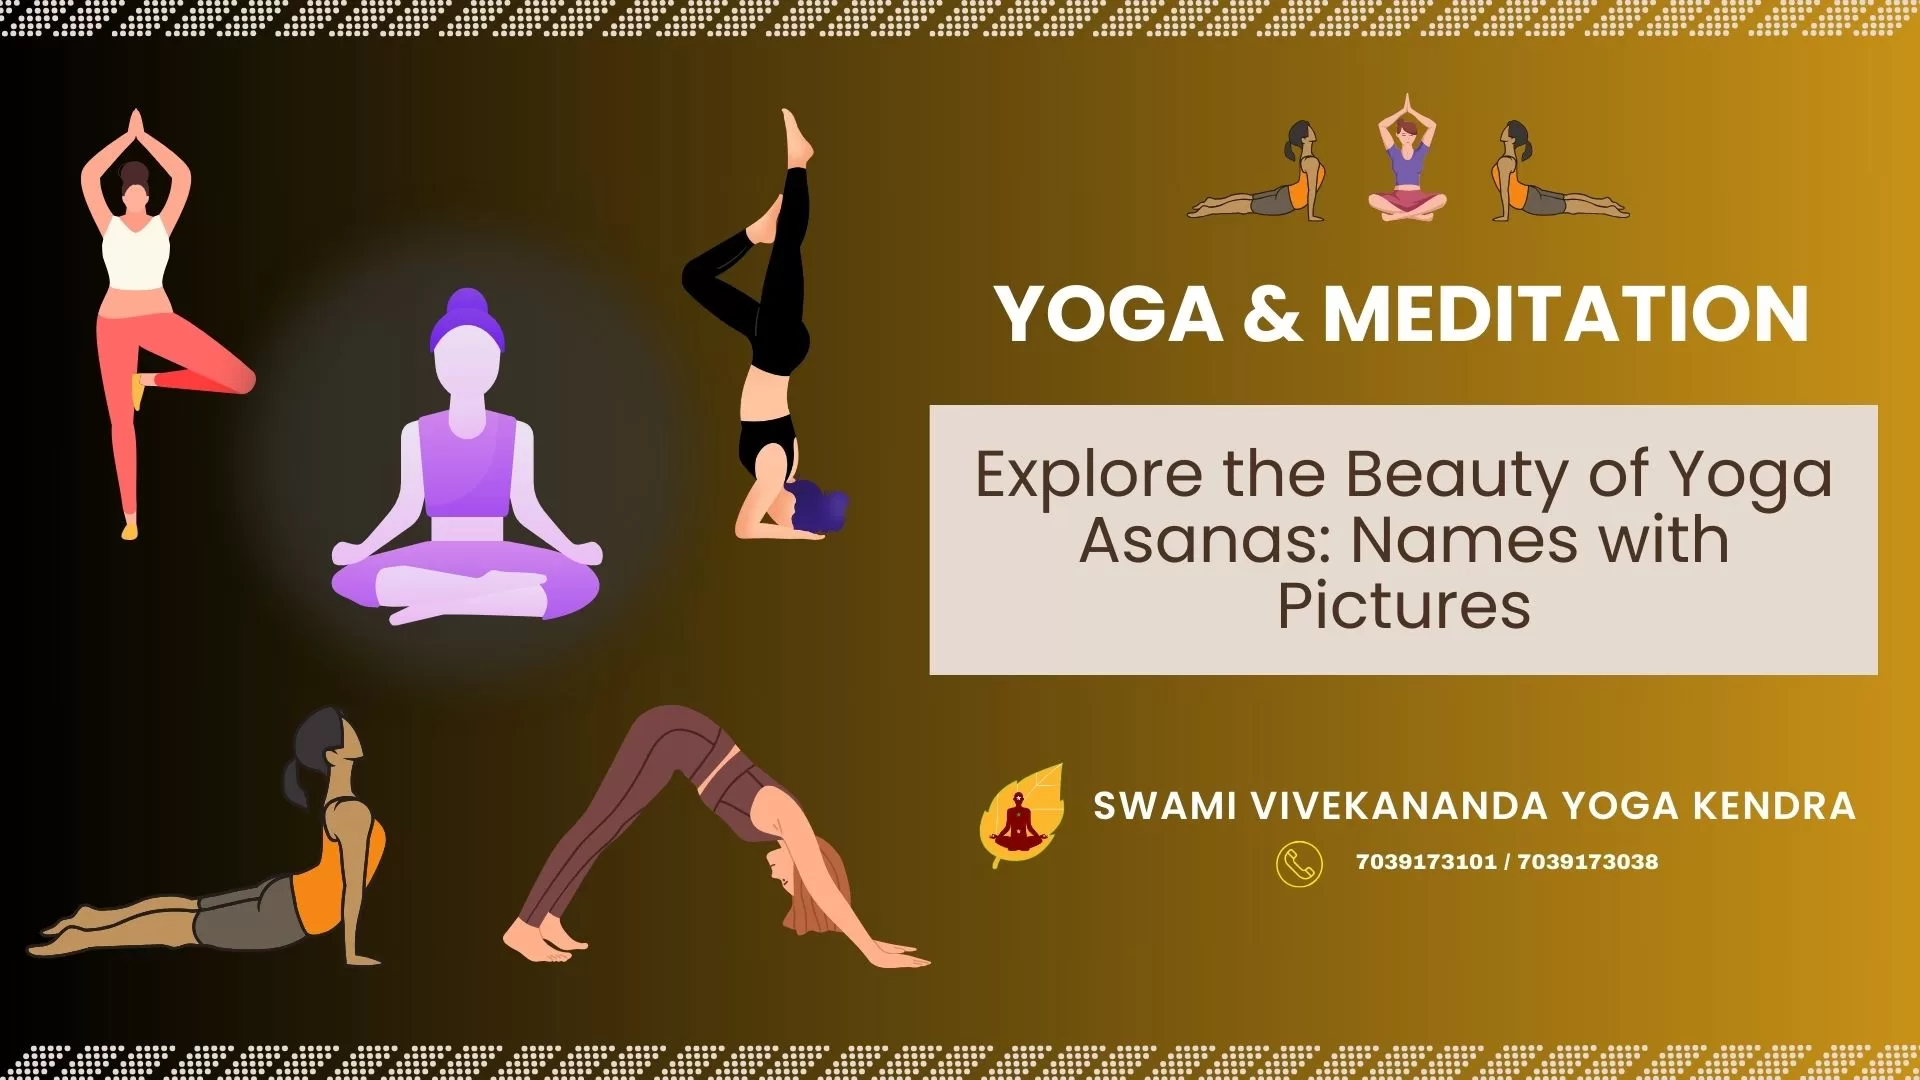 108 Yoga Stick Figure Poses english & Sanskrit Names Included 2 Page  Digital Download - Etsy | Yoga stick figures, Yoga poses, Yoga poses names